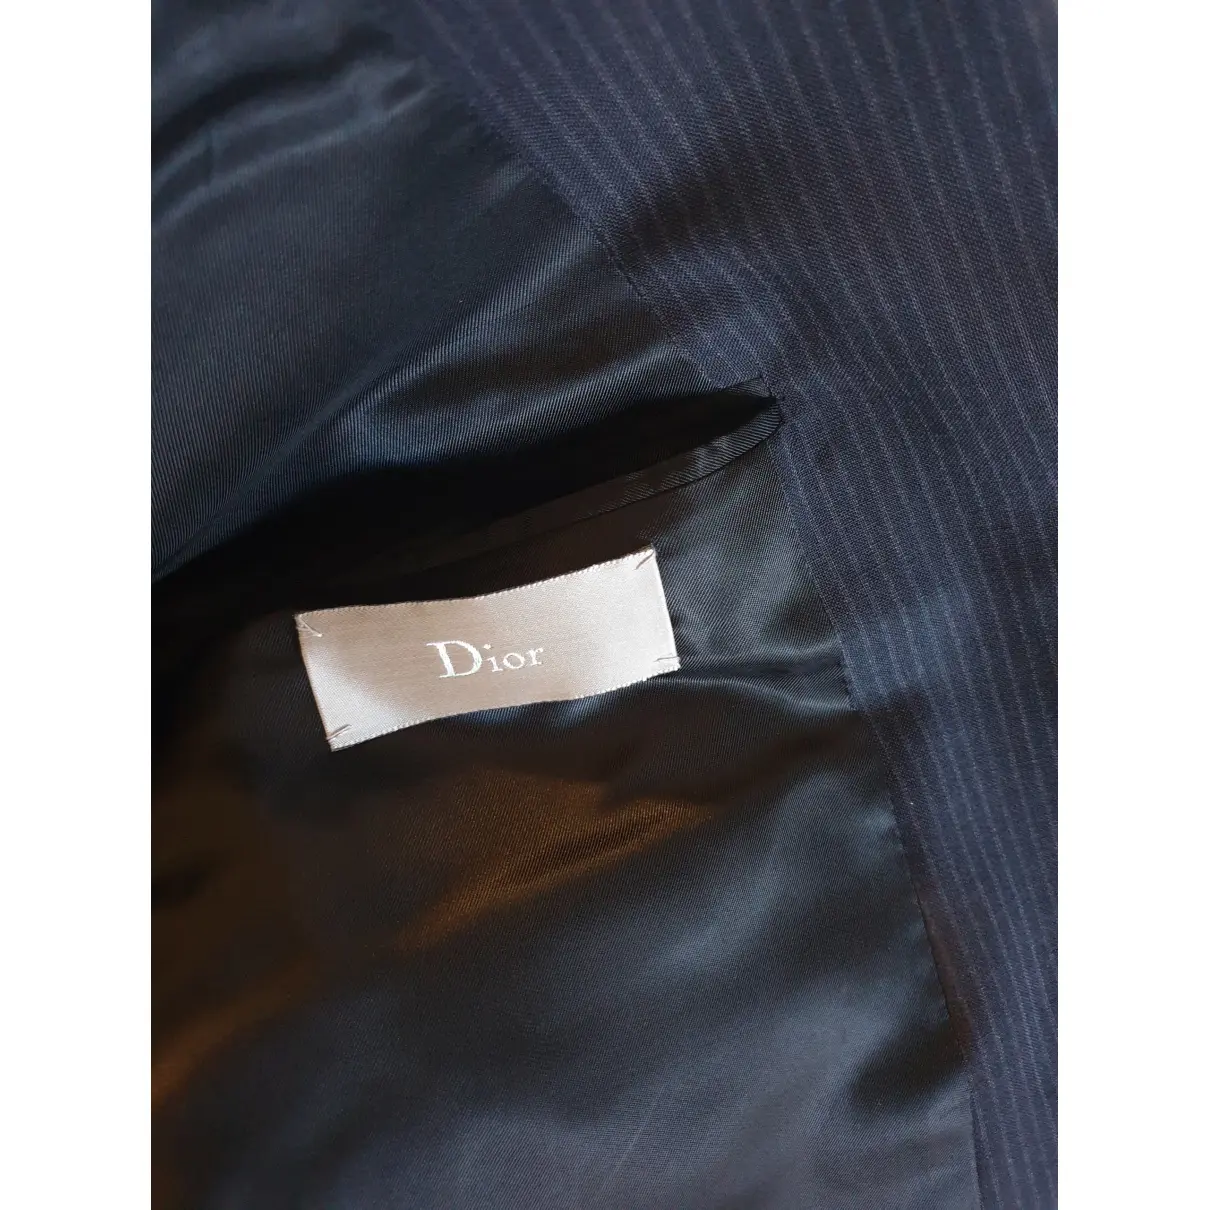 Buy Dior Homme Wool suit online